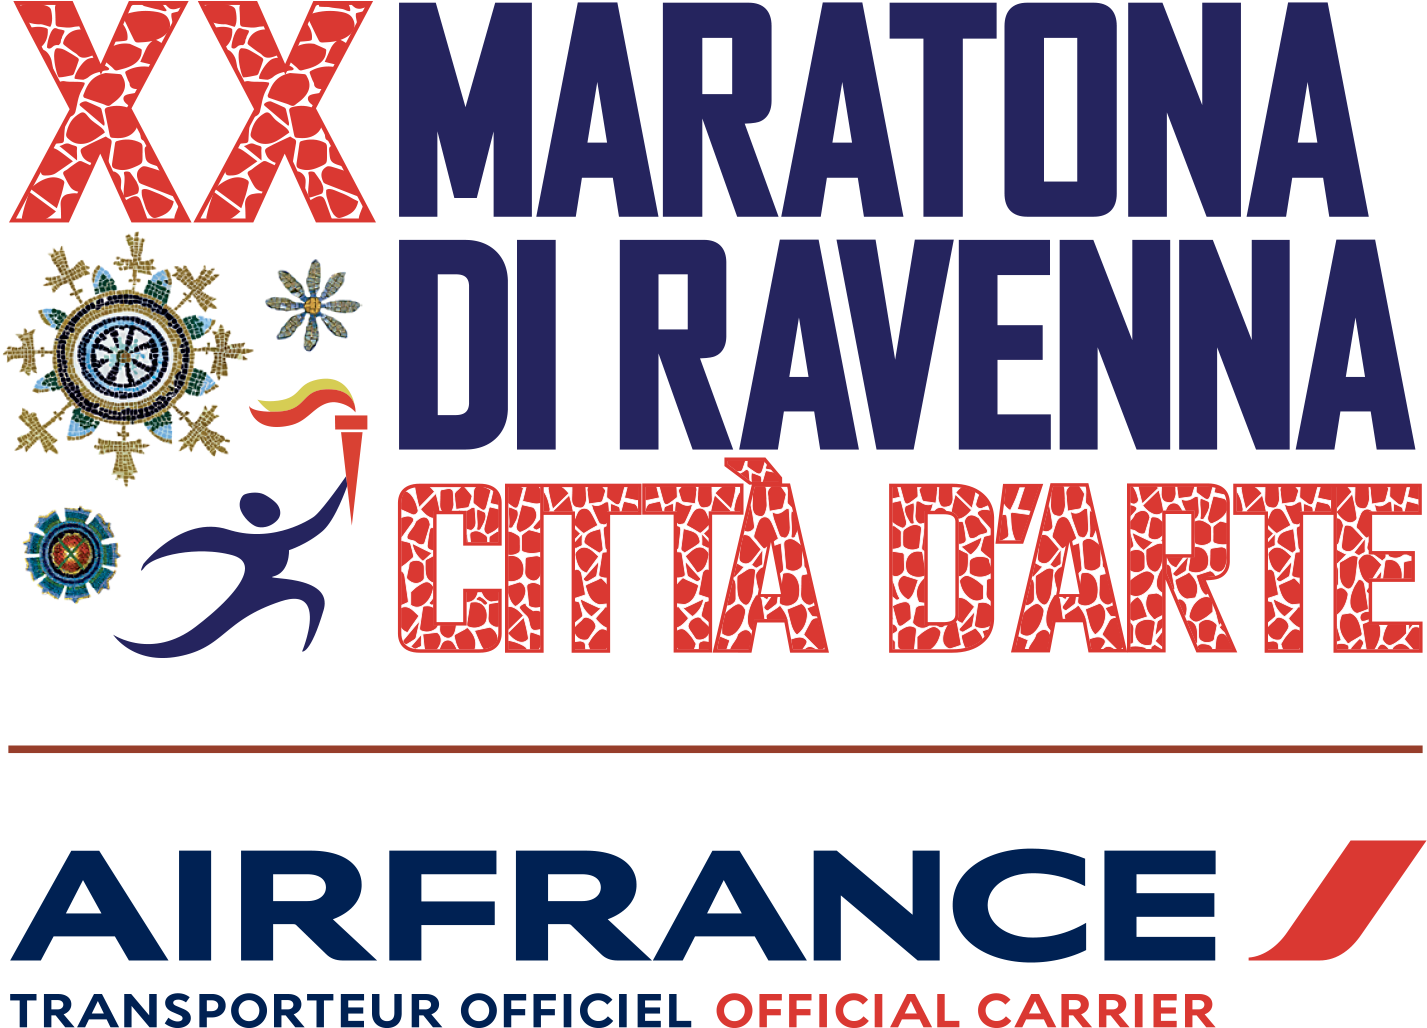 Maratona-airfrance Logo Congiunto 2 - Air France (1527x1134), Png Download